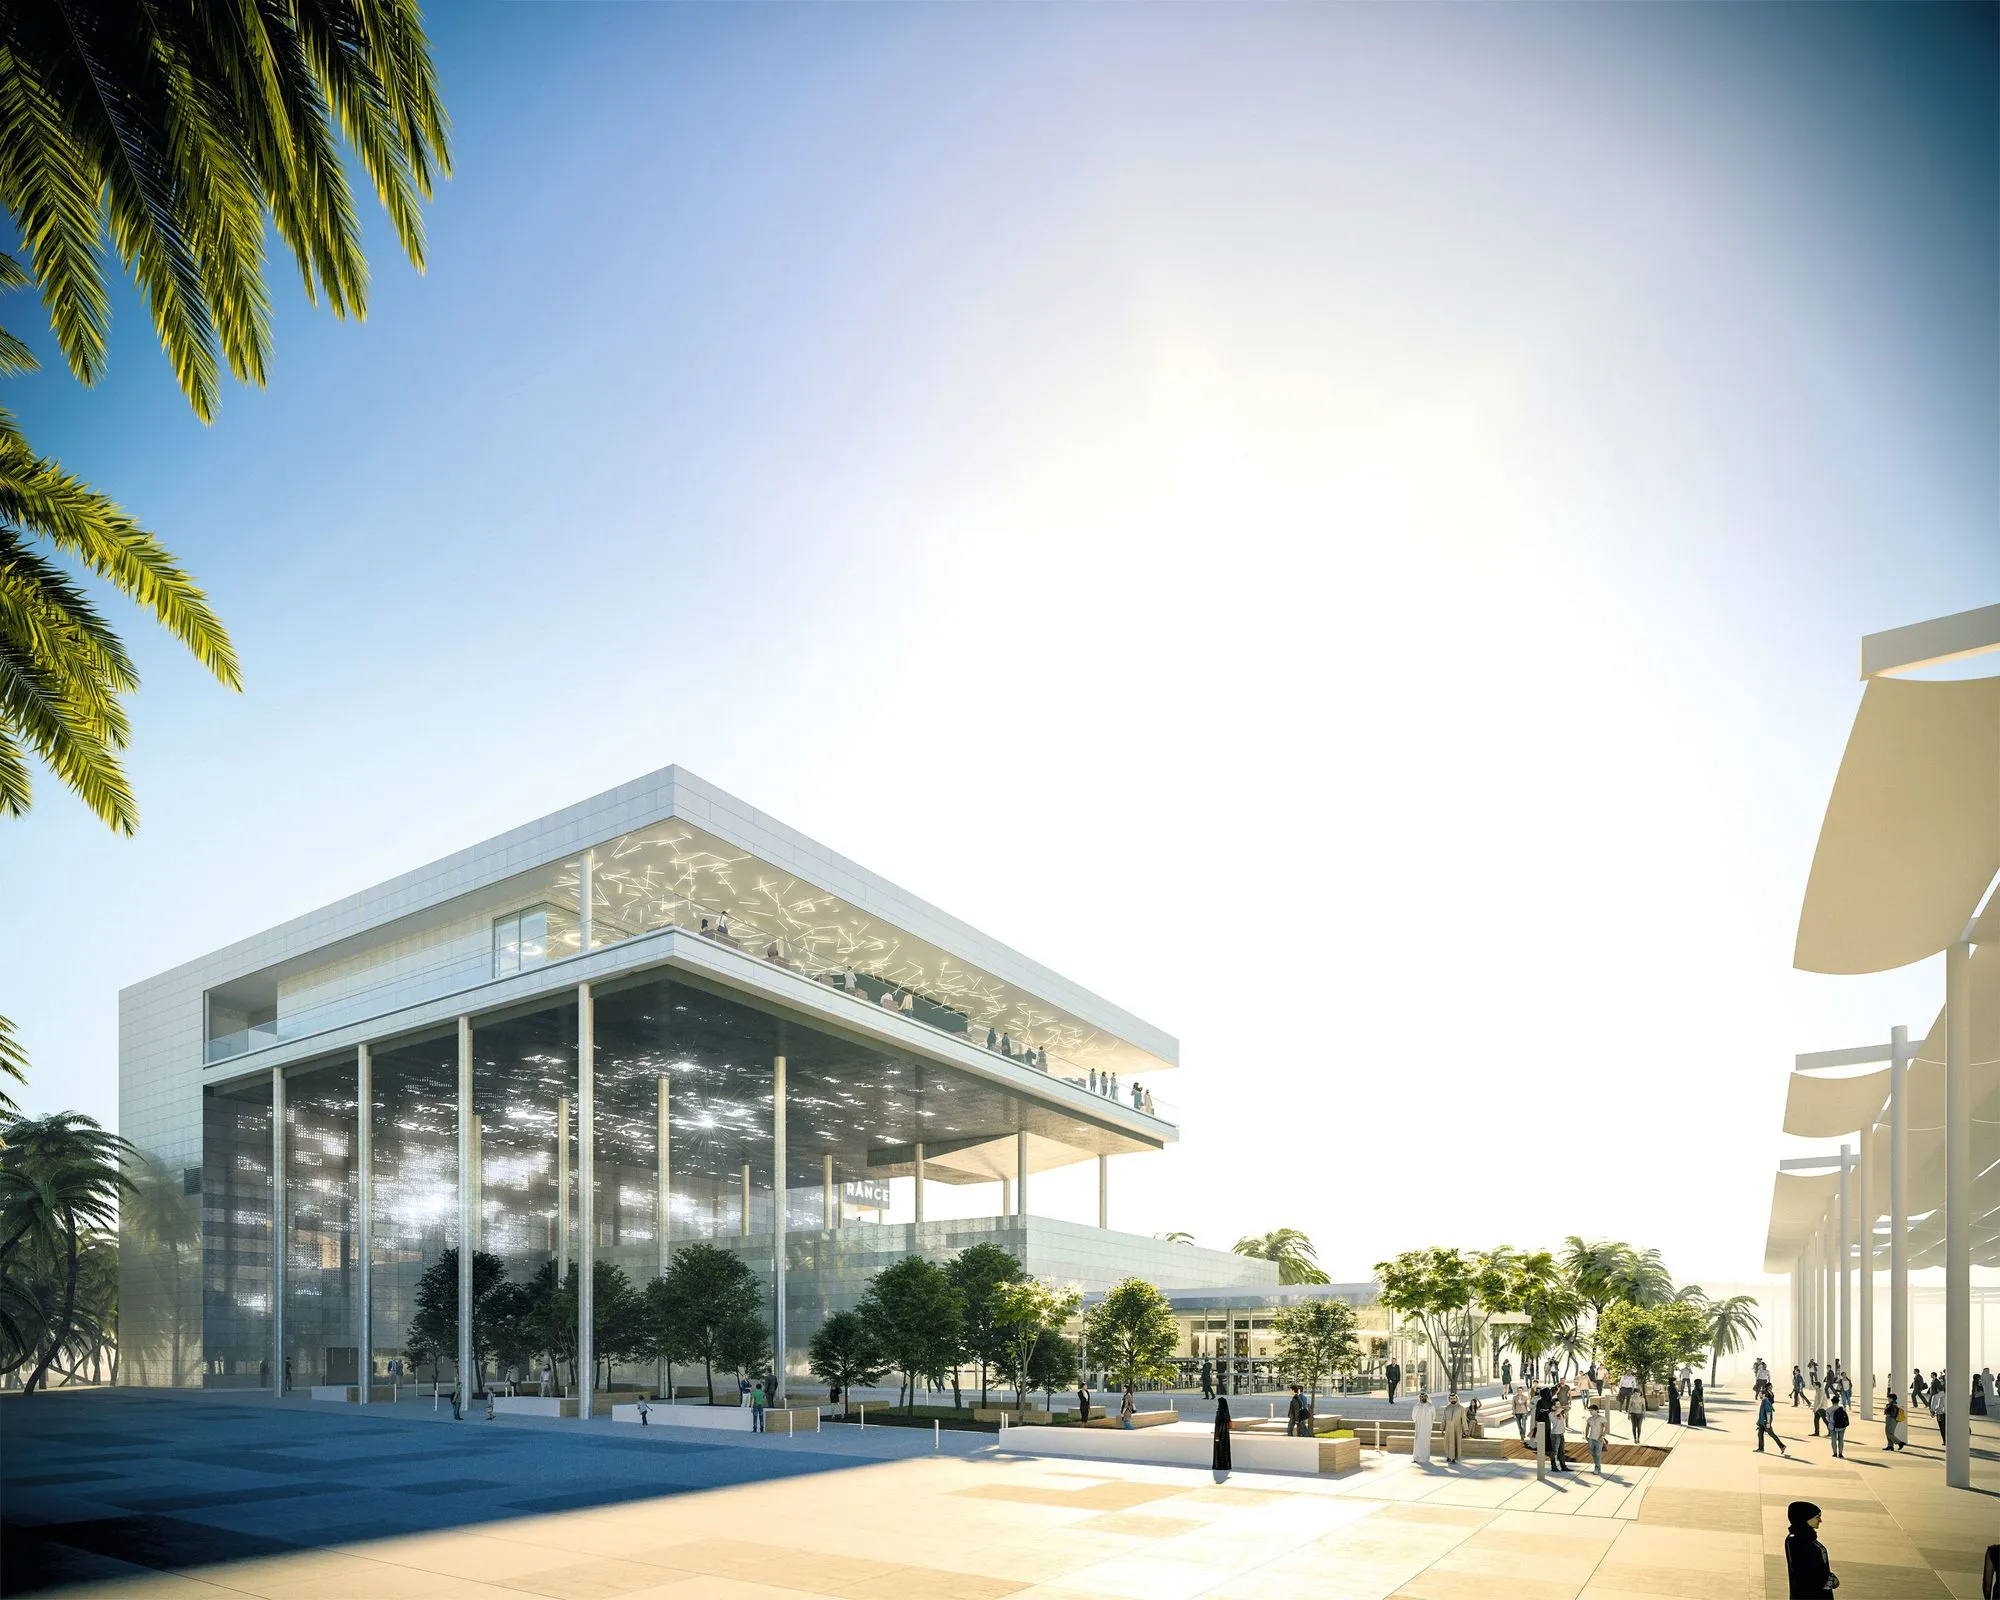 Pavillon France Dubaï 2020